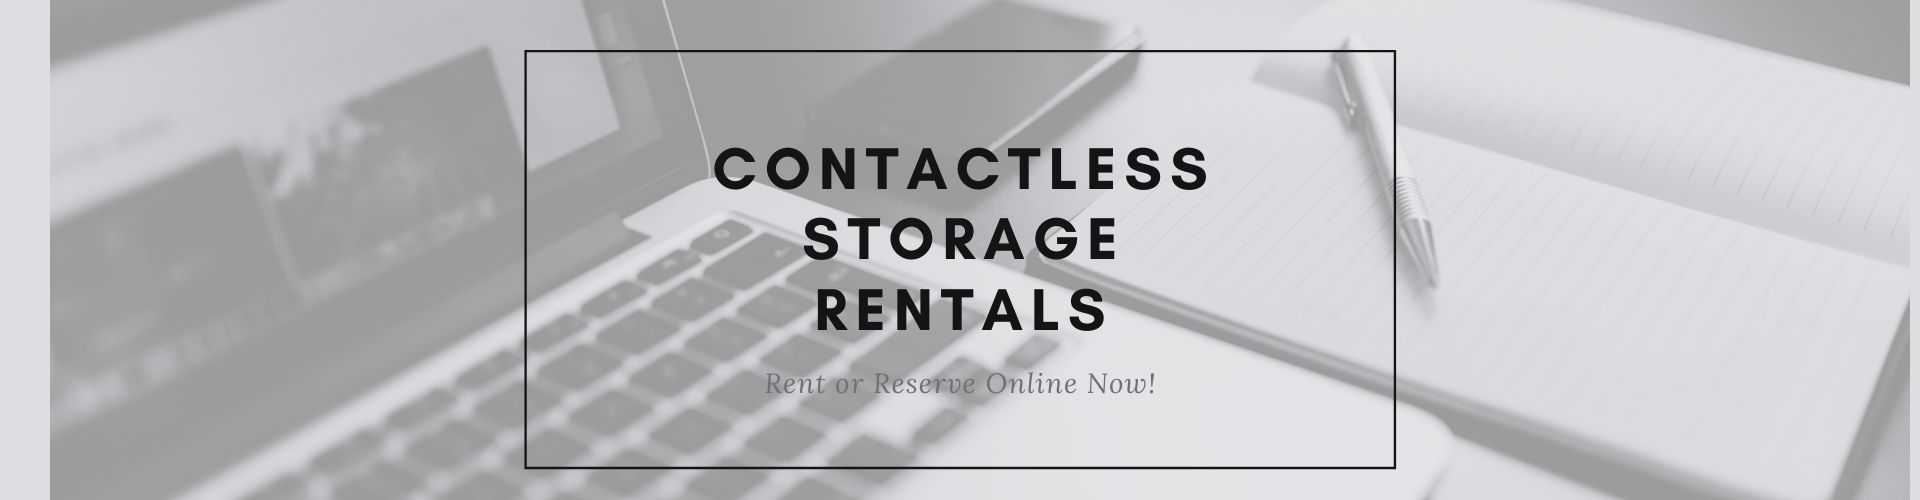 Contactless Storage Rentals in North Carolina